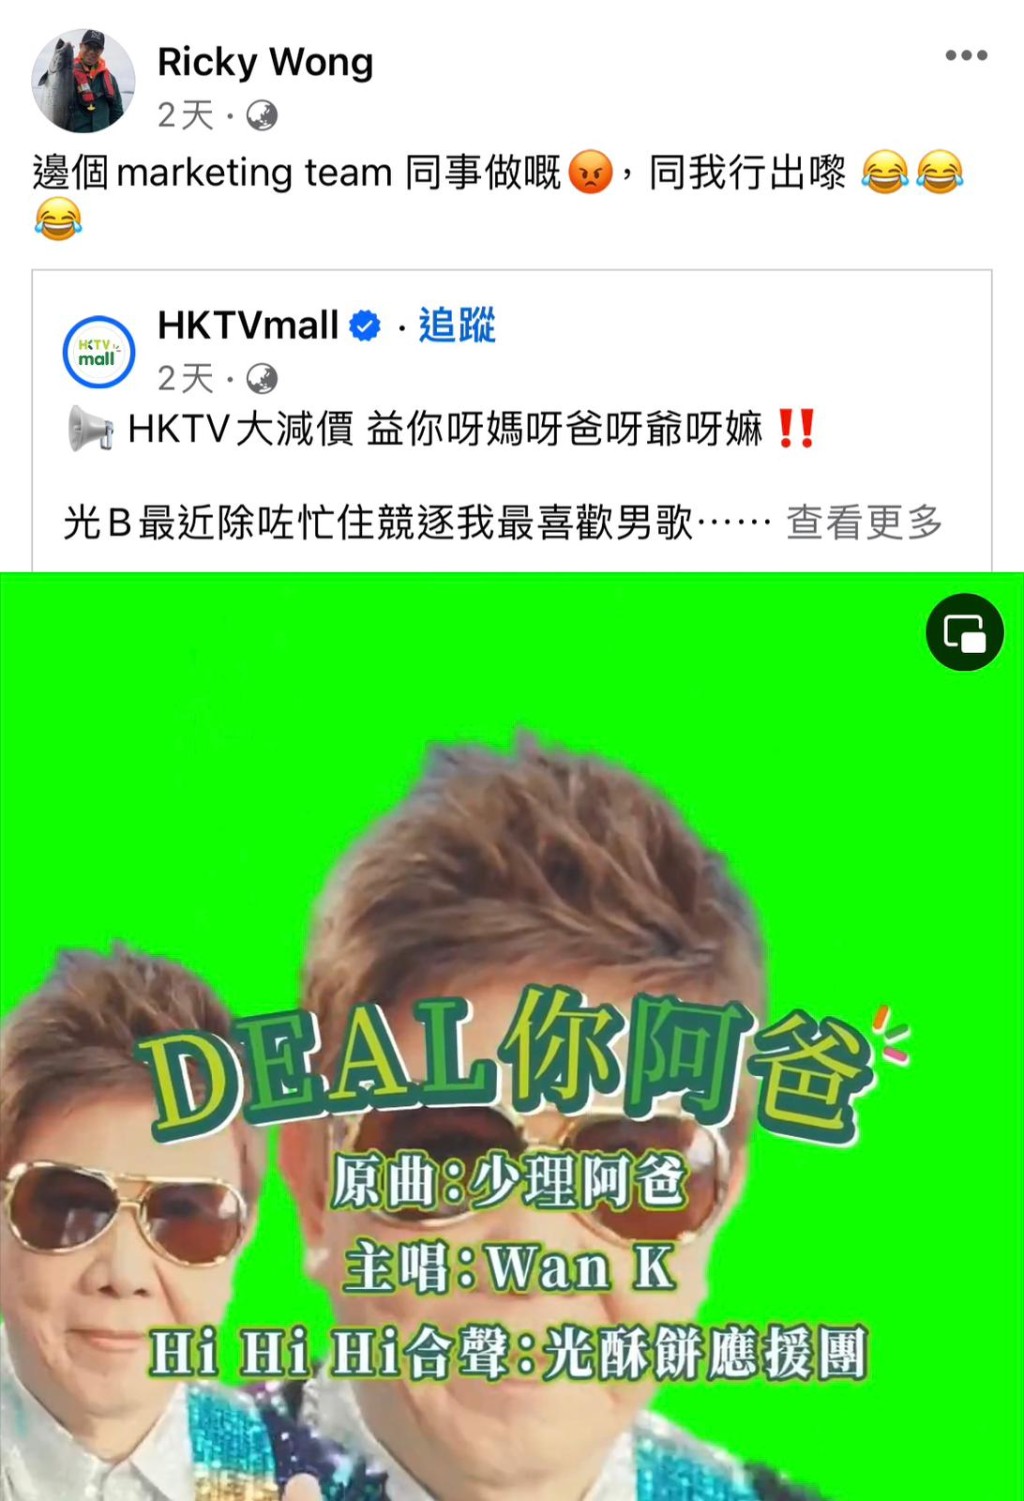 HKTV mall老板王维基也亲自在facebook转发MV，并指「边个marketing team同事做嘅，同我行出嚟 」。